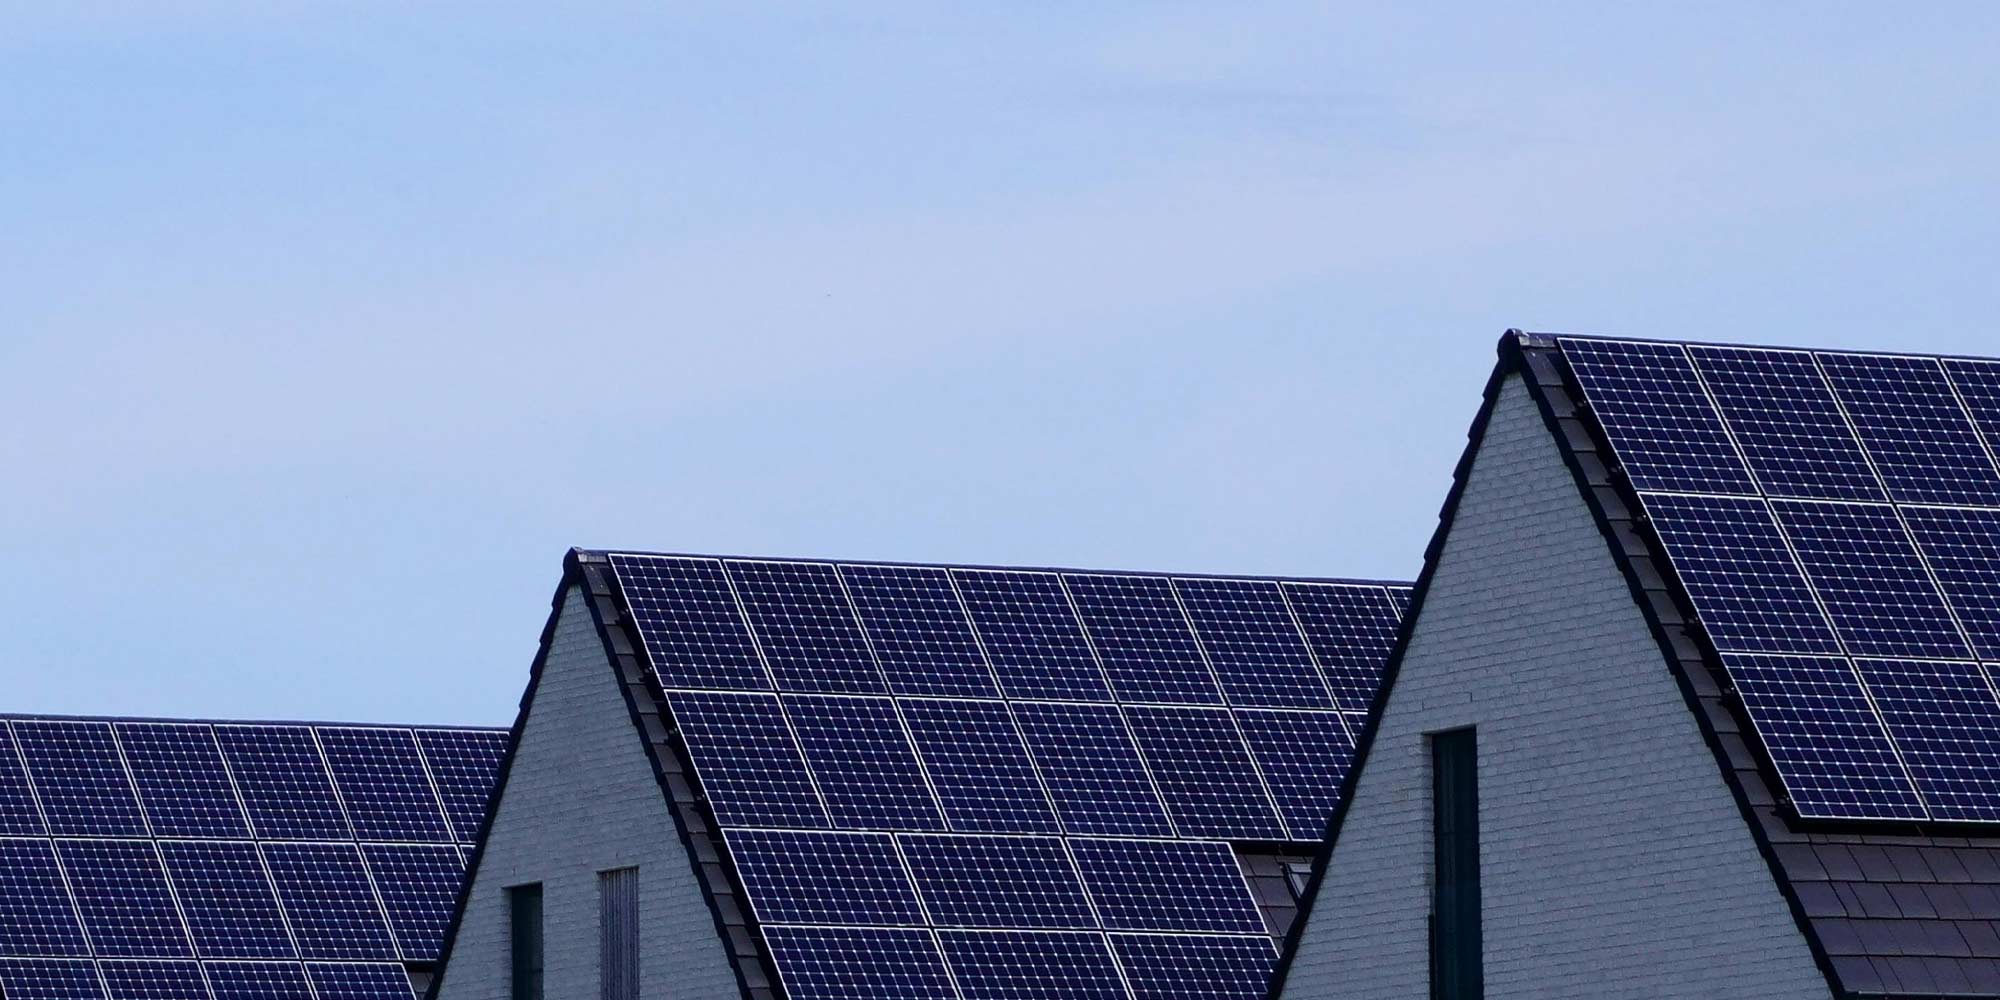 Rooftop-solar-panel